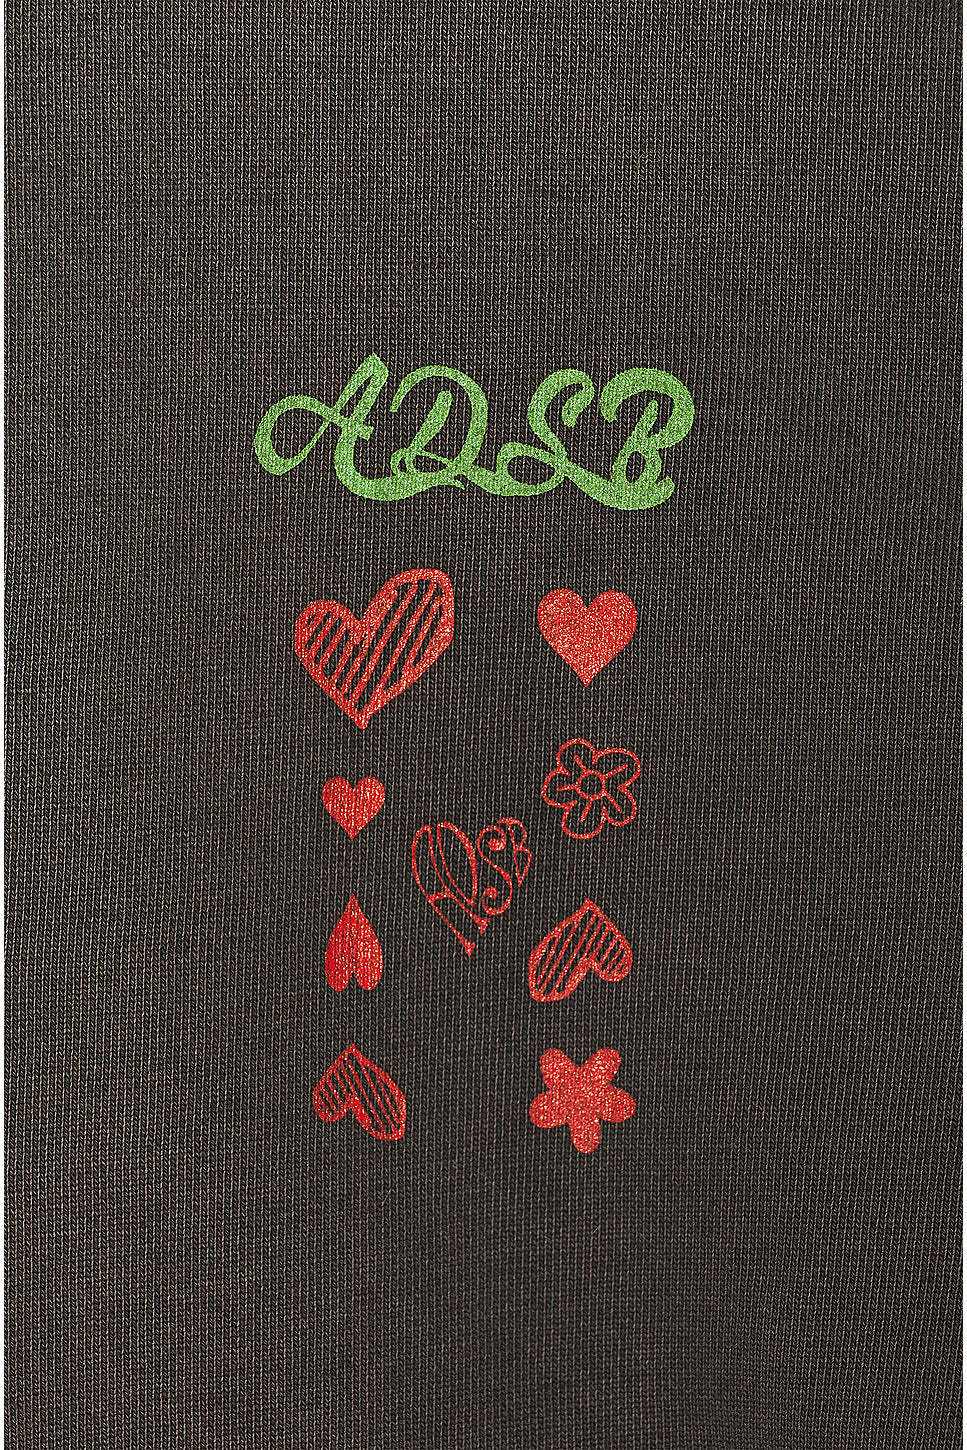 Essential ADSB Hearts Card Hoodie